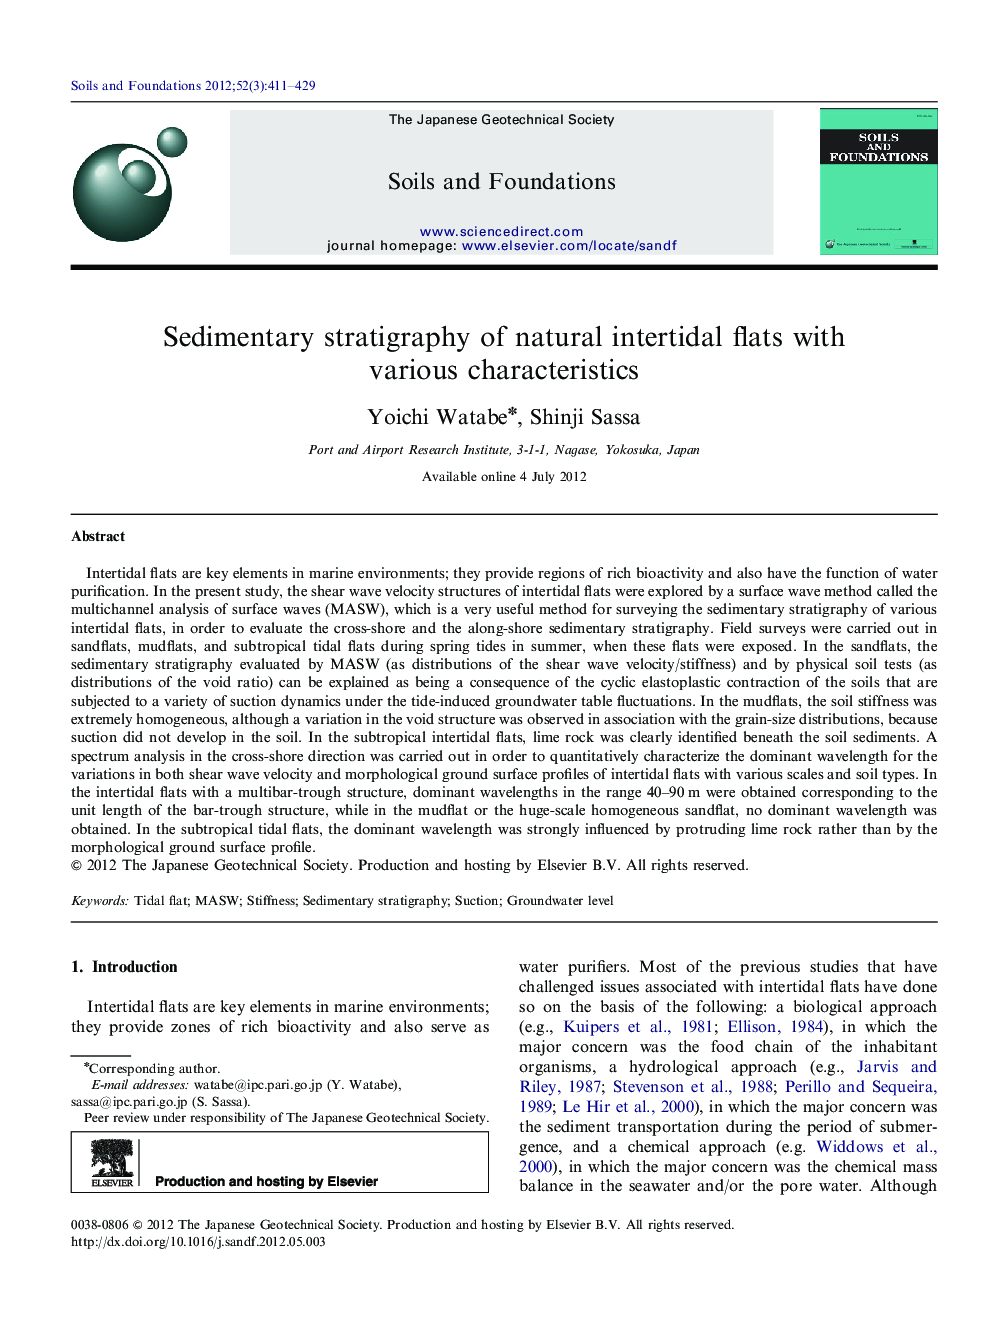 Sedimentary stratigraphy of natural intertidal flats with various characteristics 